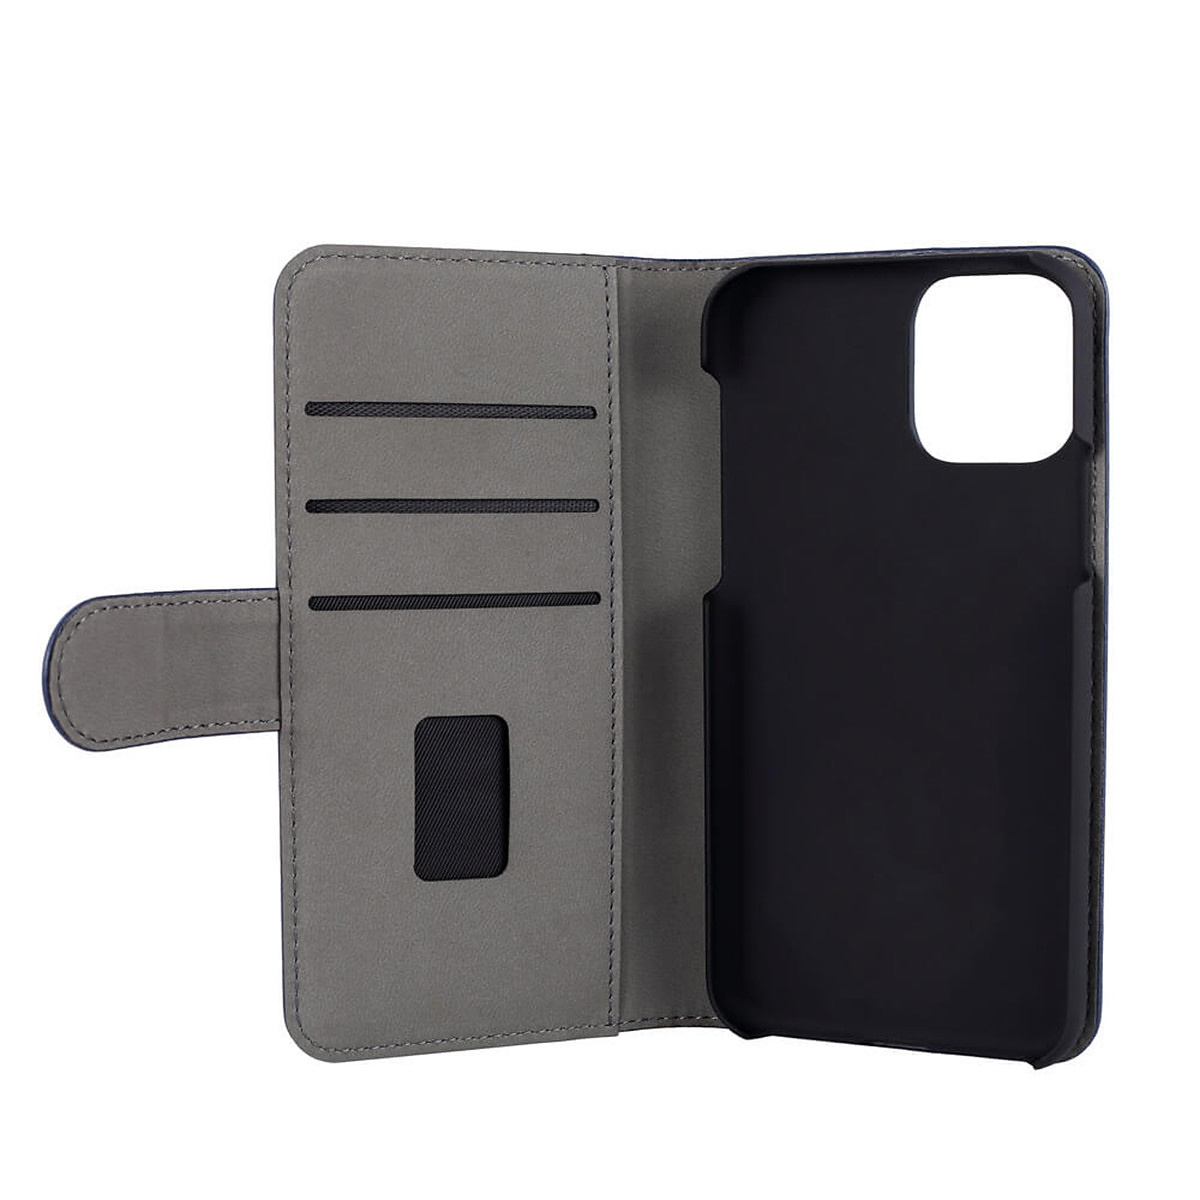 Gear plånboksväska, Limited Edition, iPhone 11 Pro, blå